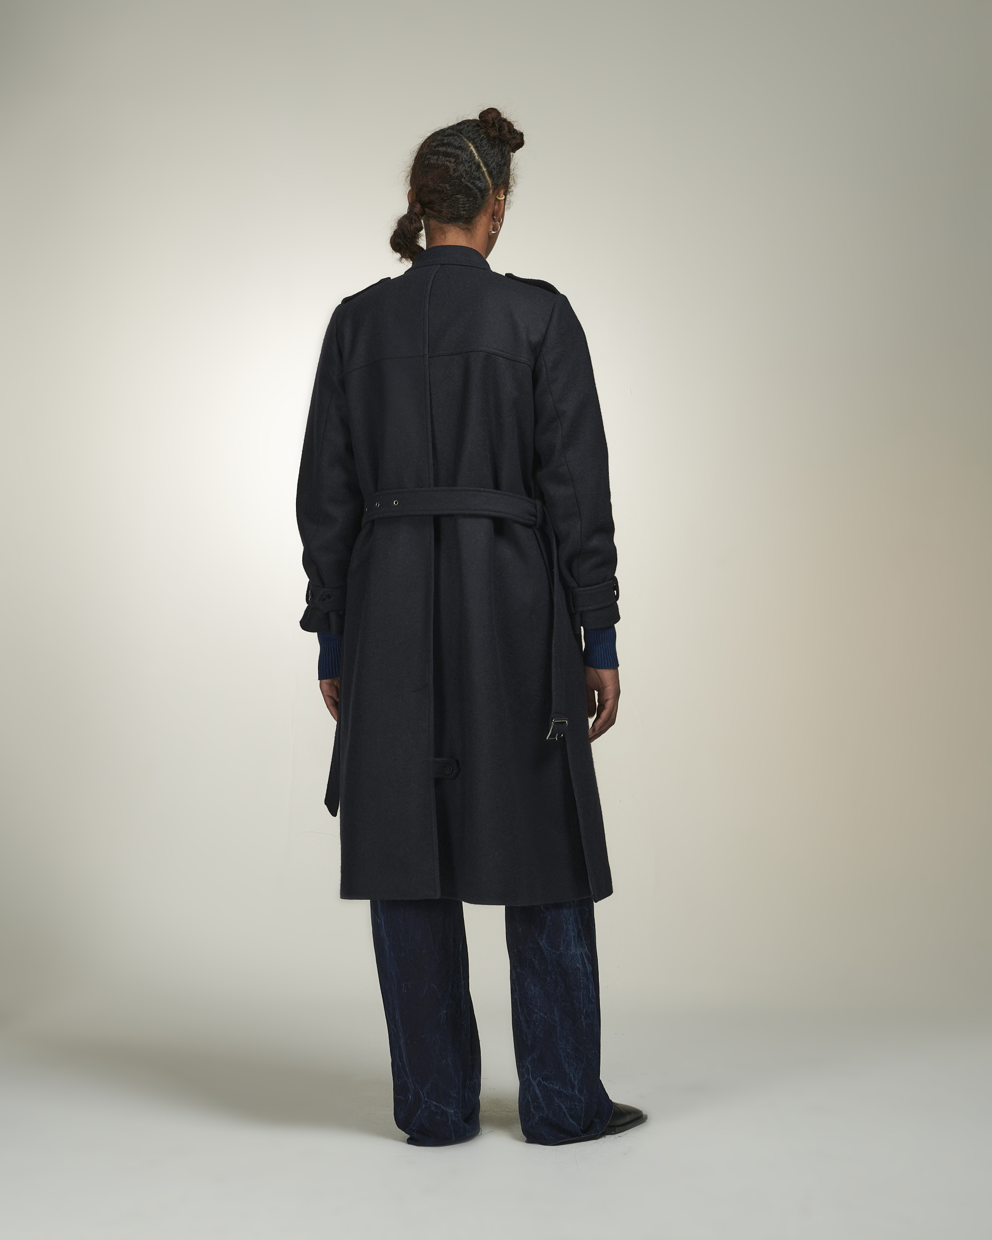 Façon Jacmin_FW21_Manolo-blue-trenchcoat-AW21-collection-women-denim-wardrobe-3_490EUR.jpg